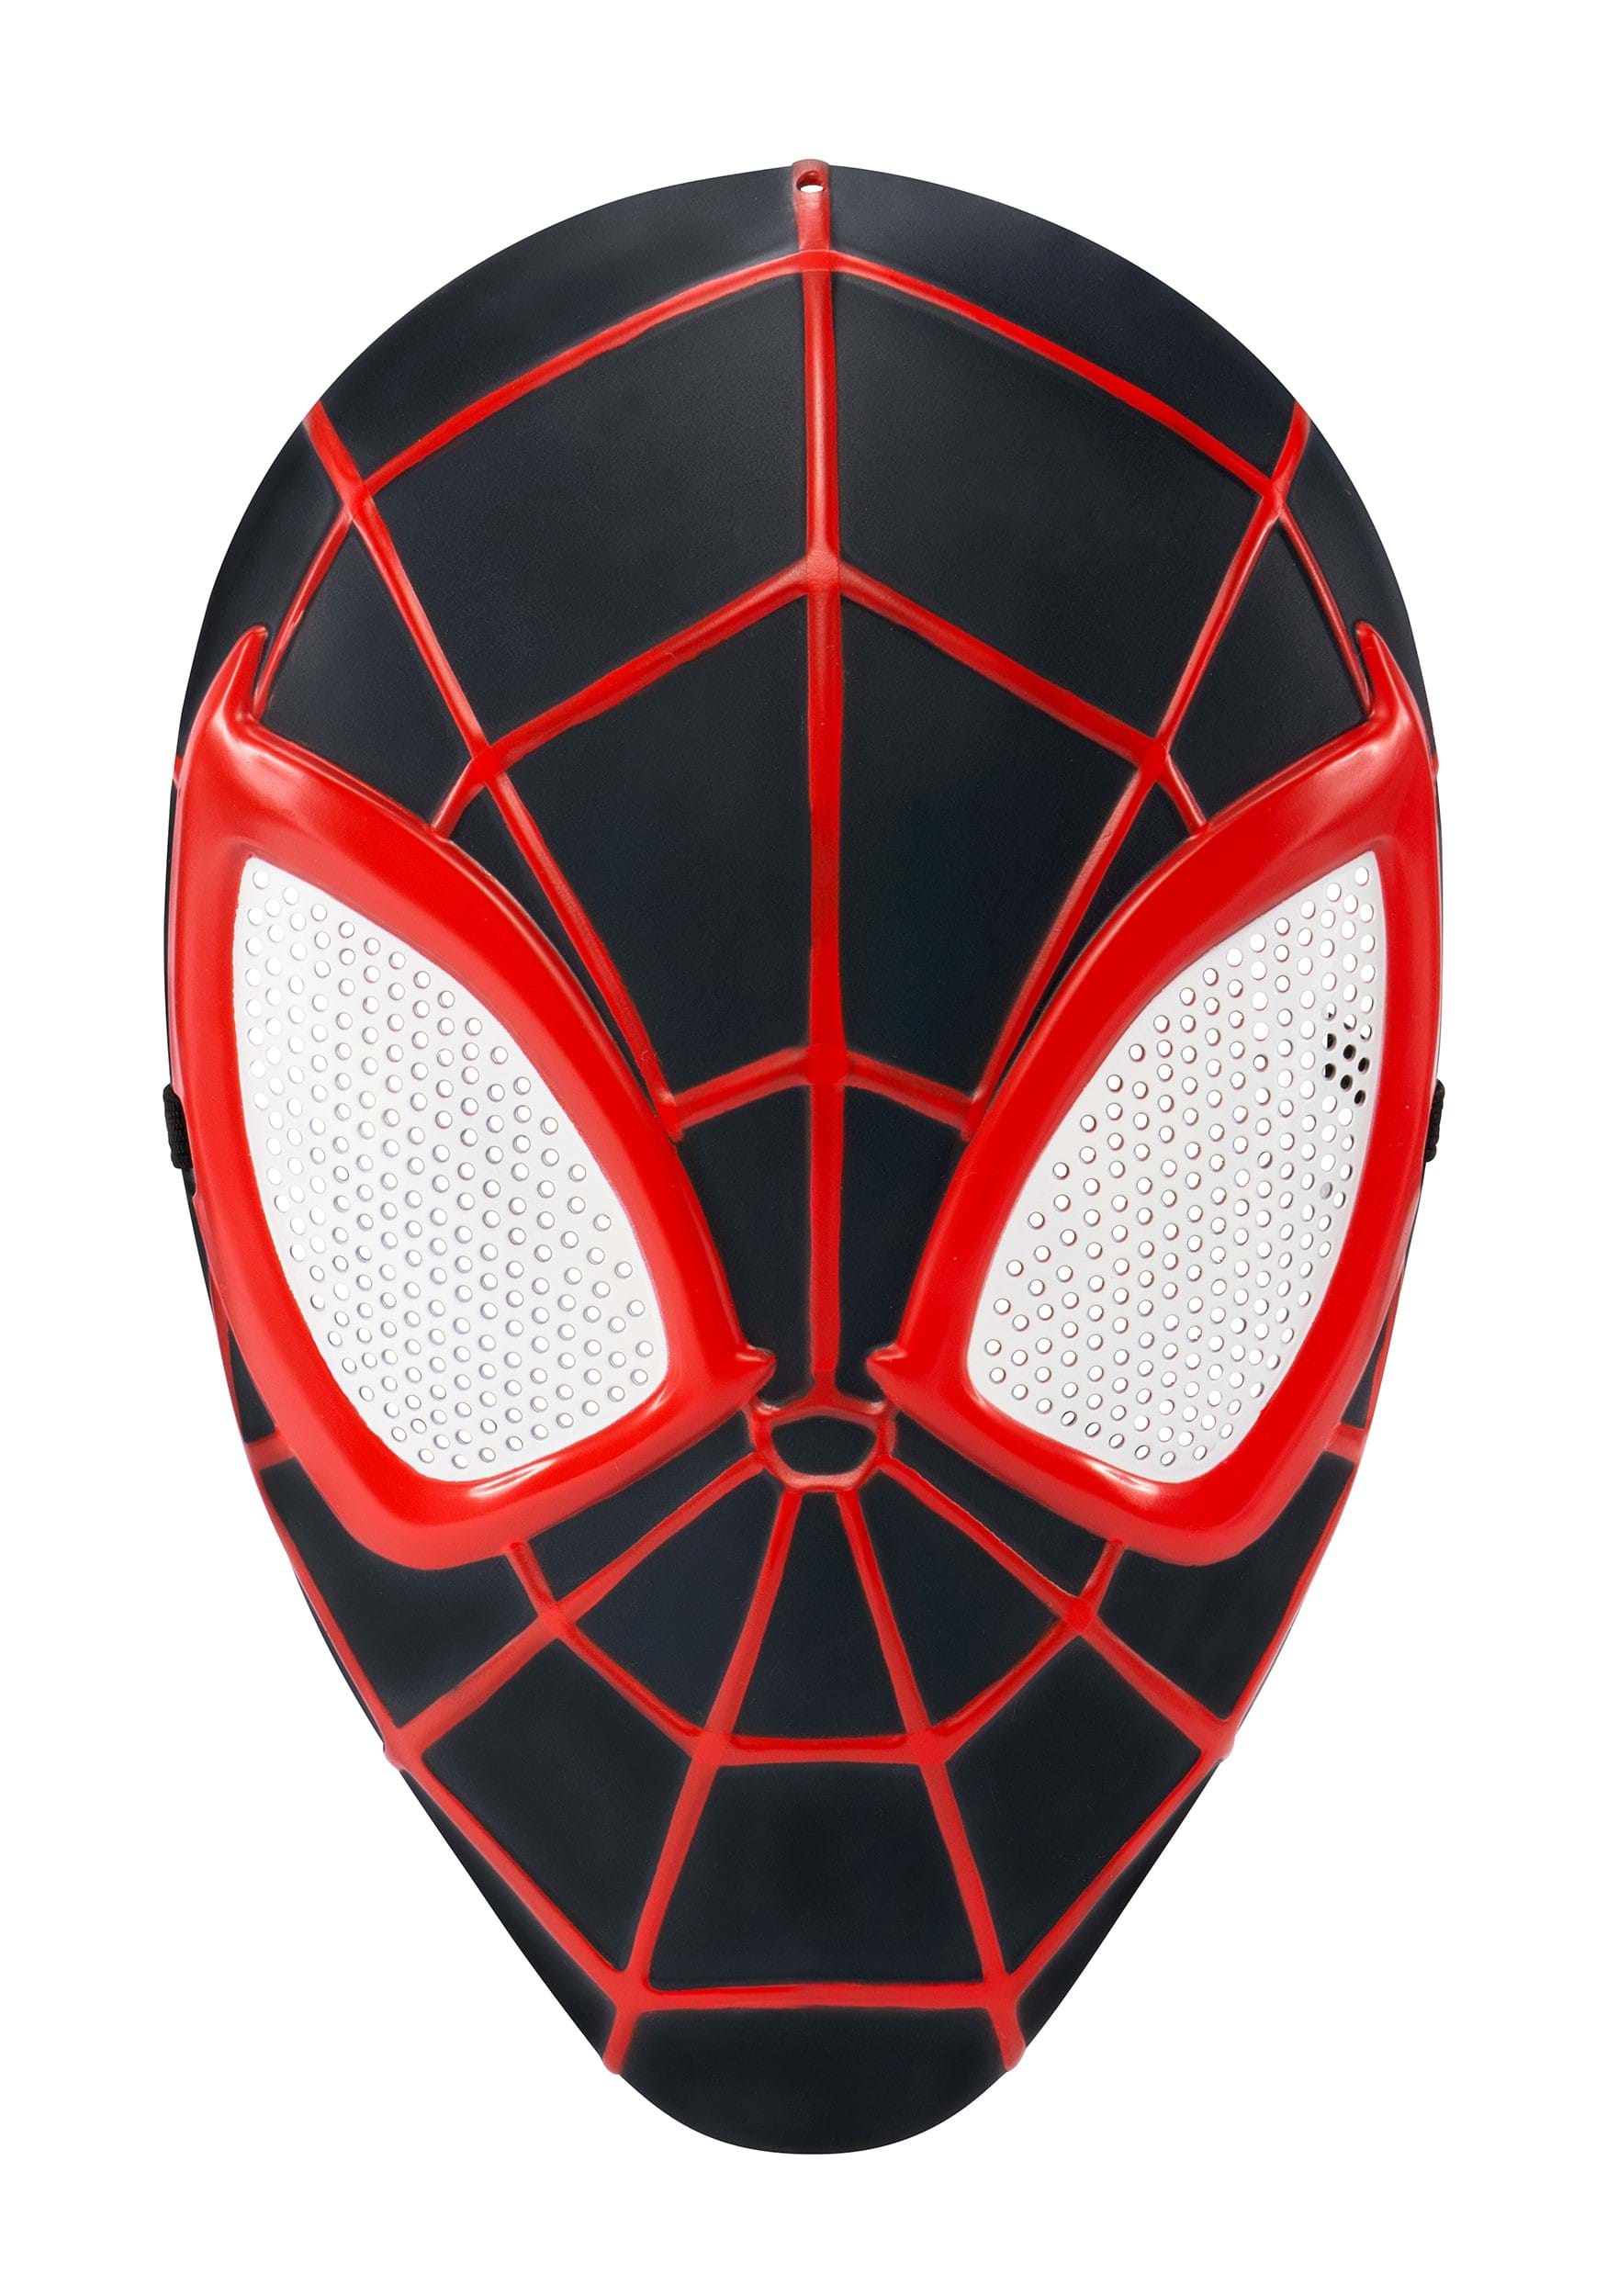 Spider-Man Molded Plastic Mask for Kids